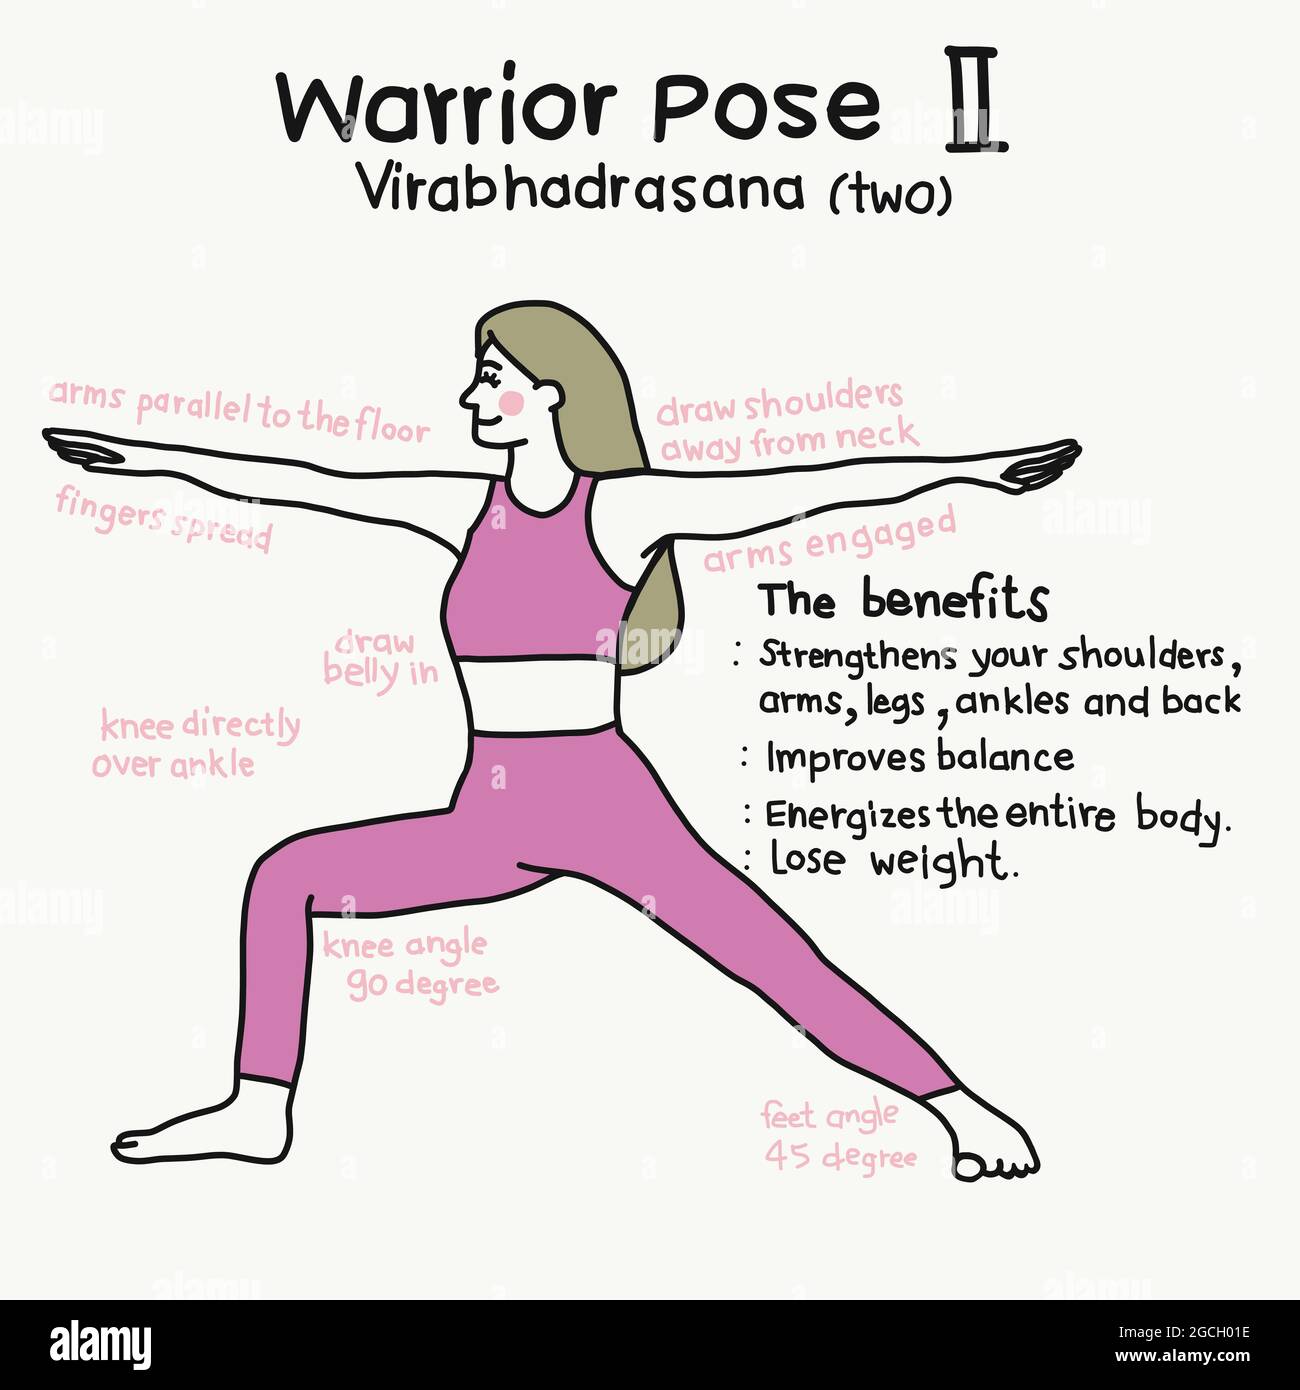 Yoga daily tips and advices - Warrior pose 3 / Virbhadrasana benefits 🗡 |  Facebook